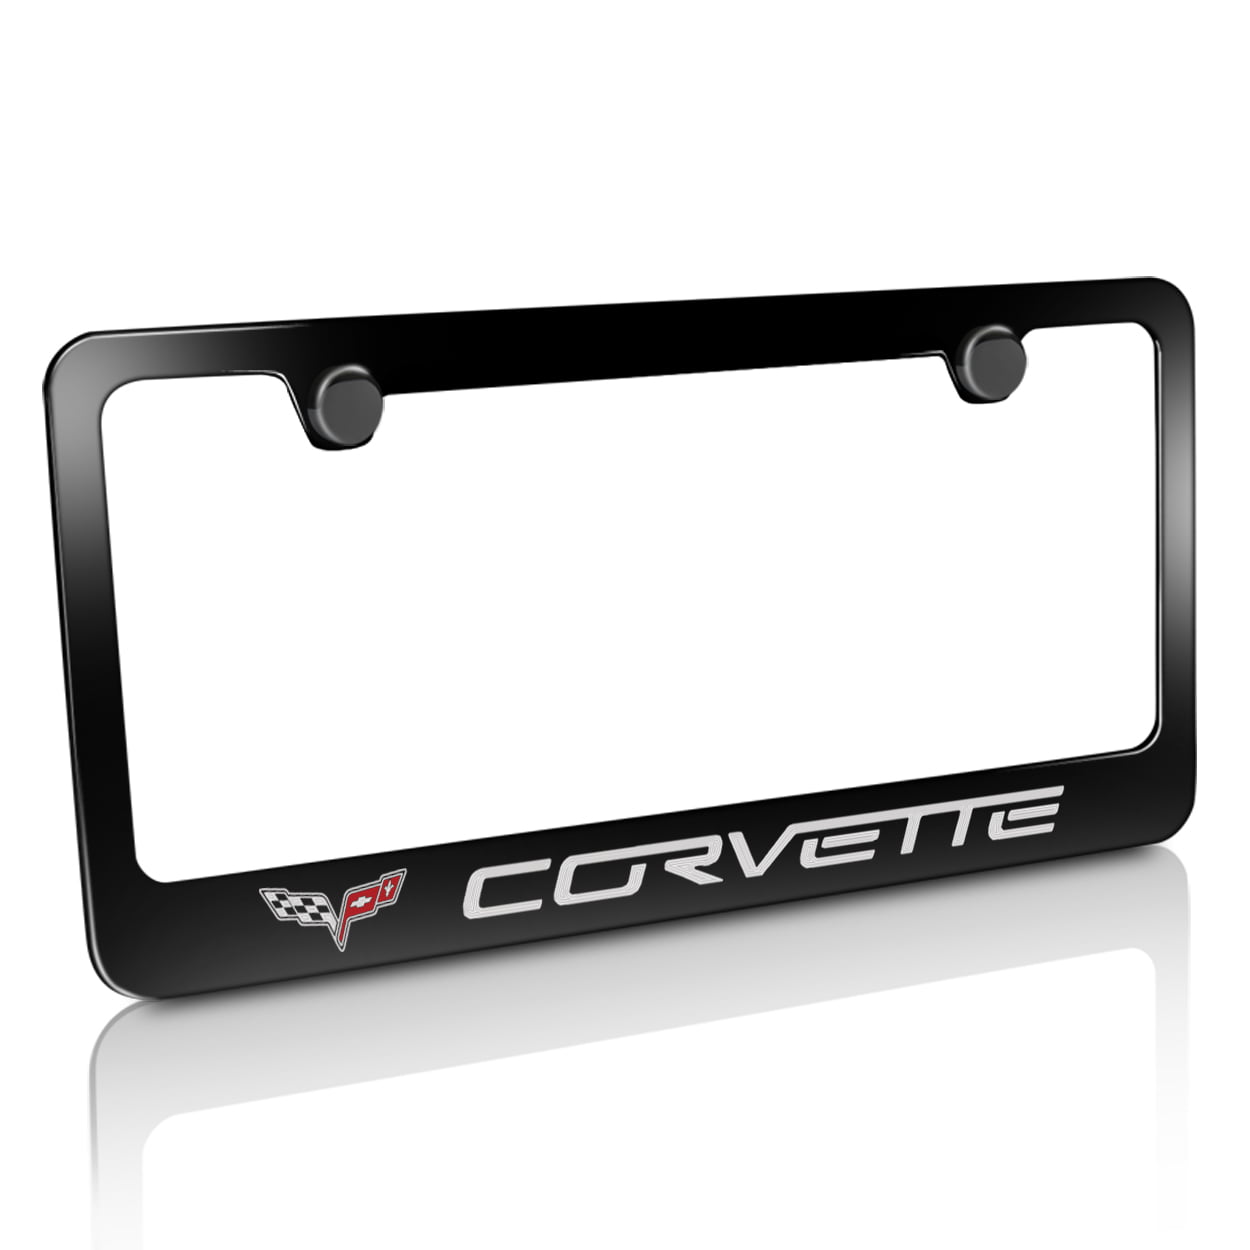 Chevrolet Chevy Corvette Licensed Aluminum Metal License Plate Sign Tag 